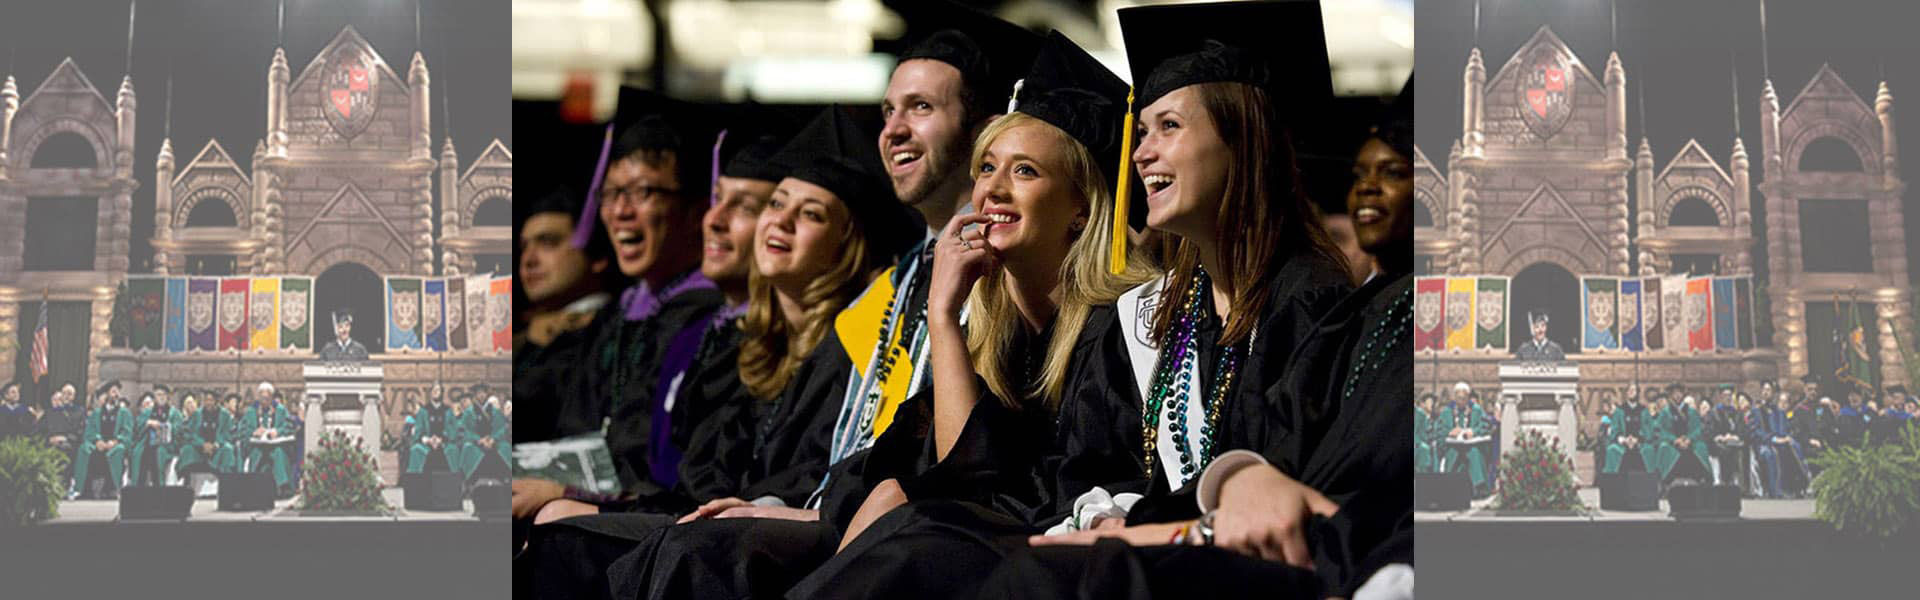 Tulane University graduation stage and students waiting to graduate